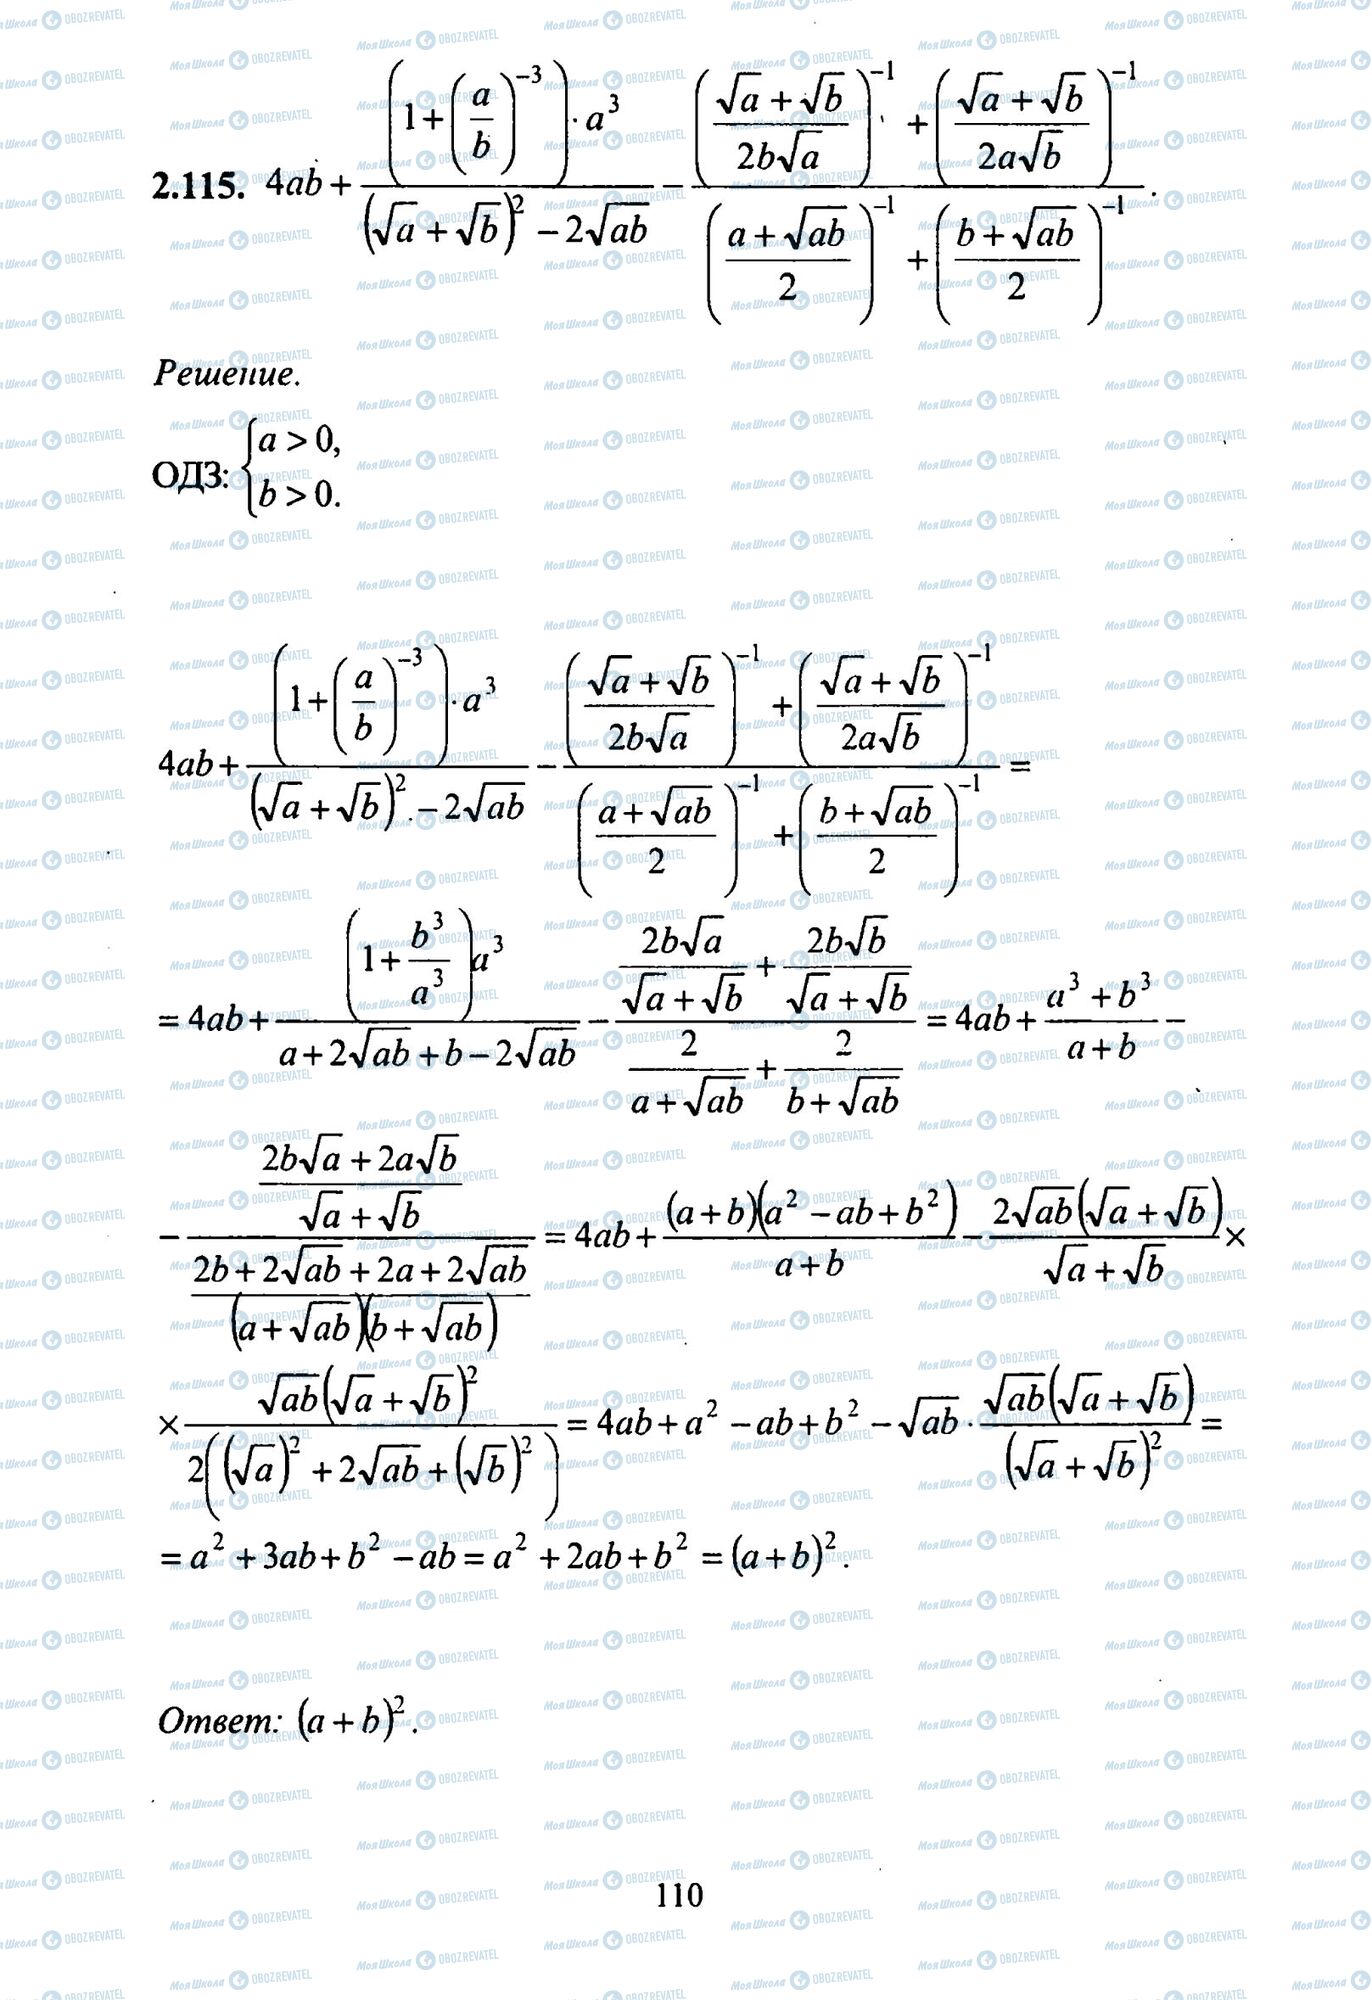 ЗНО Математика 11 класс страница 115